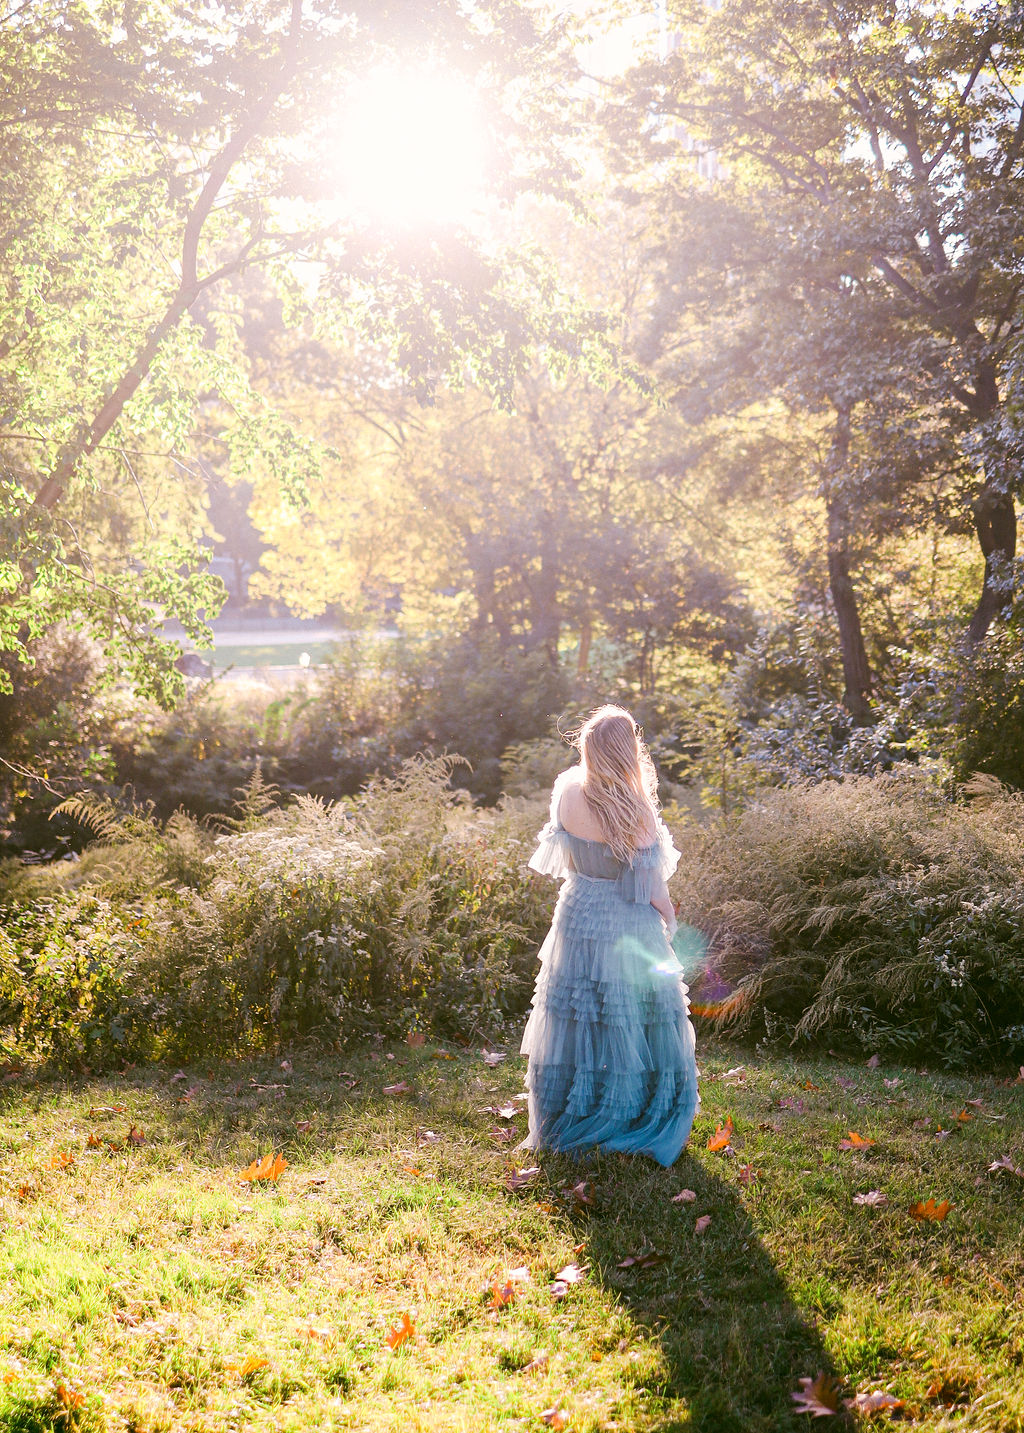 Central Park engagement photoshoot Gossip Girl Serena van der Woodsen Chelsea Loren branding photographer teal tulle blue dress